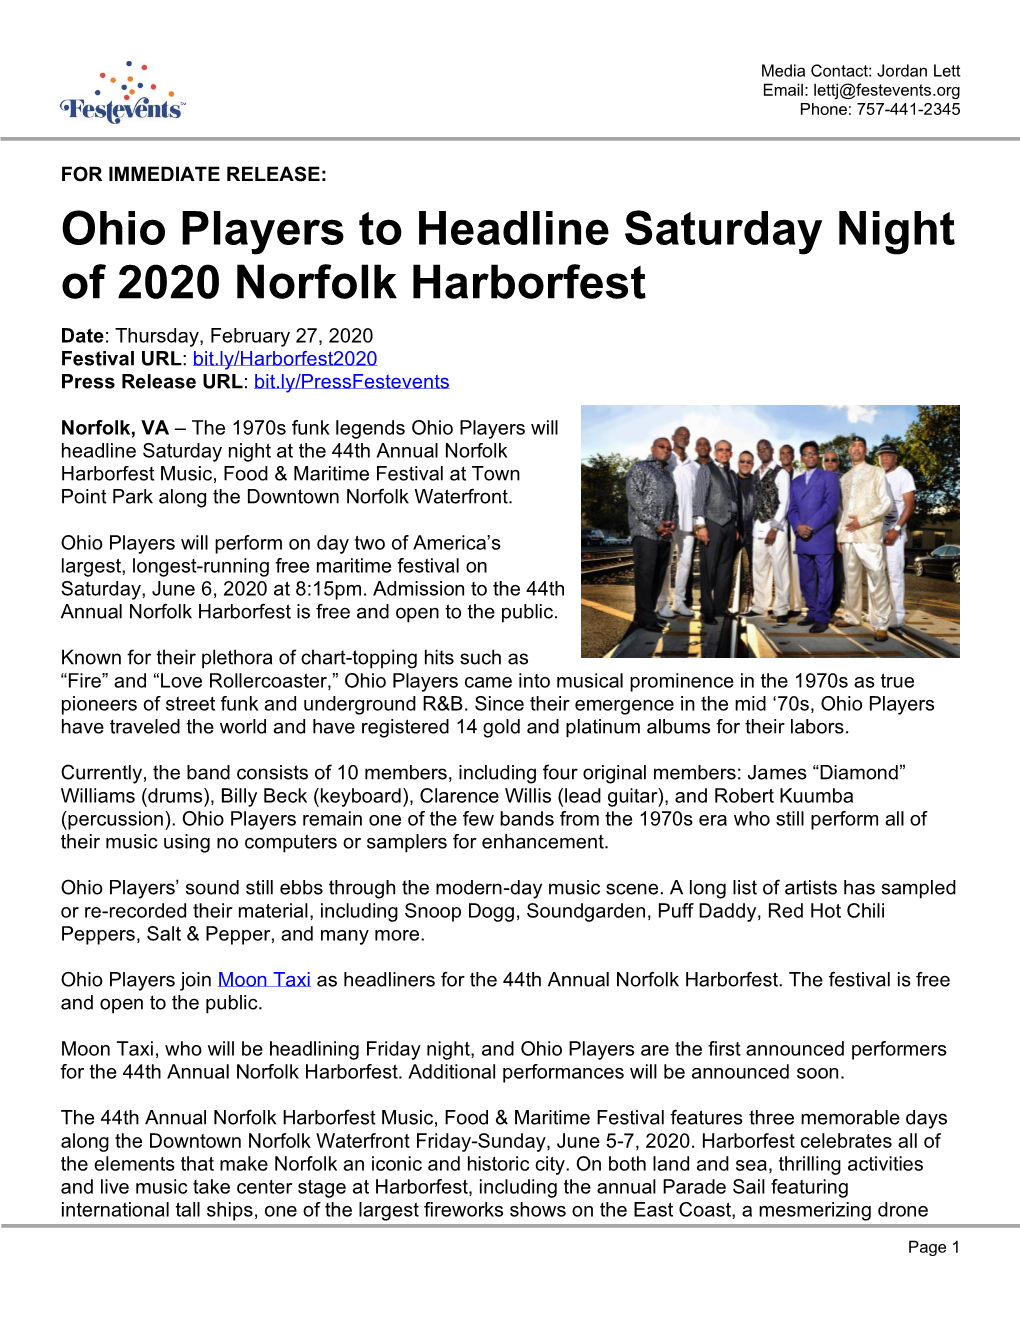 Ohio Players to Headline Saturday Night of 2020 Norfolk Harborfest